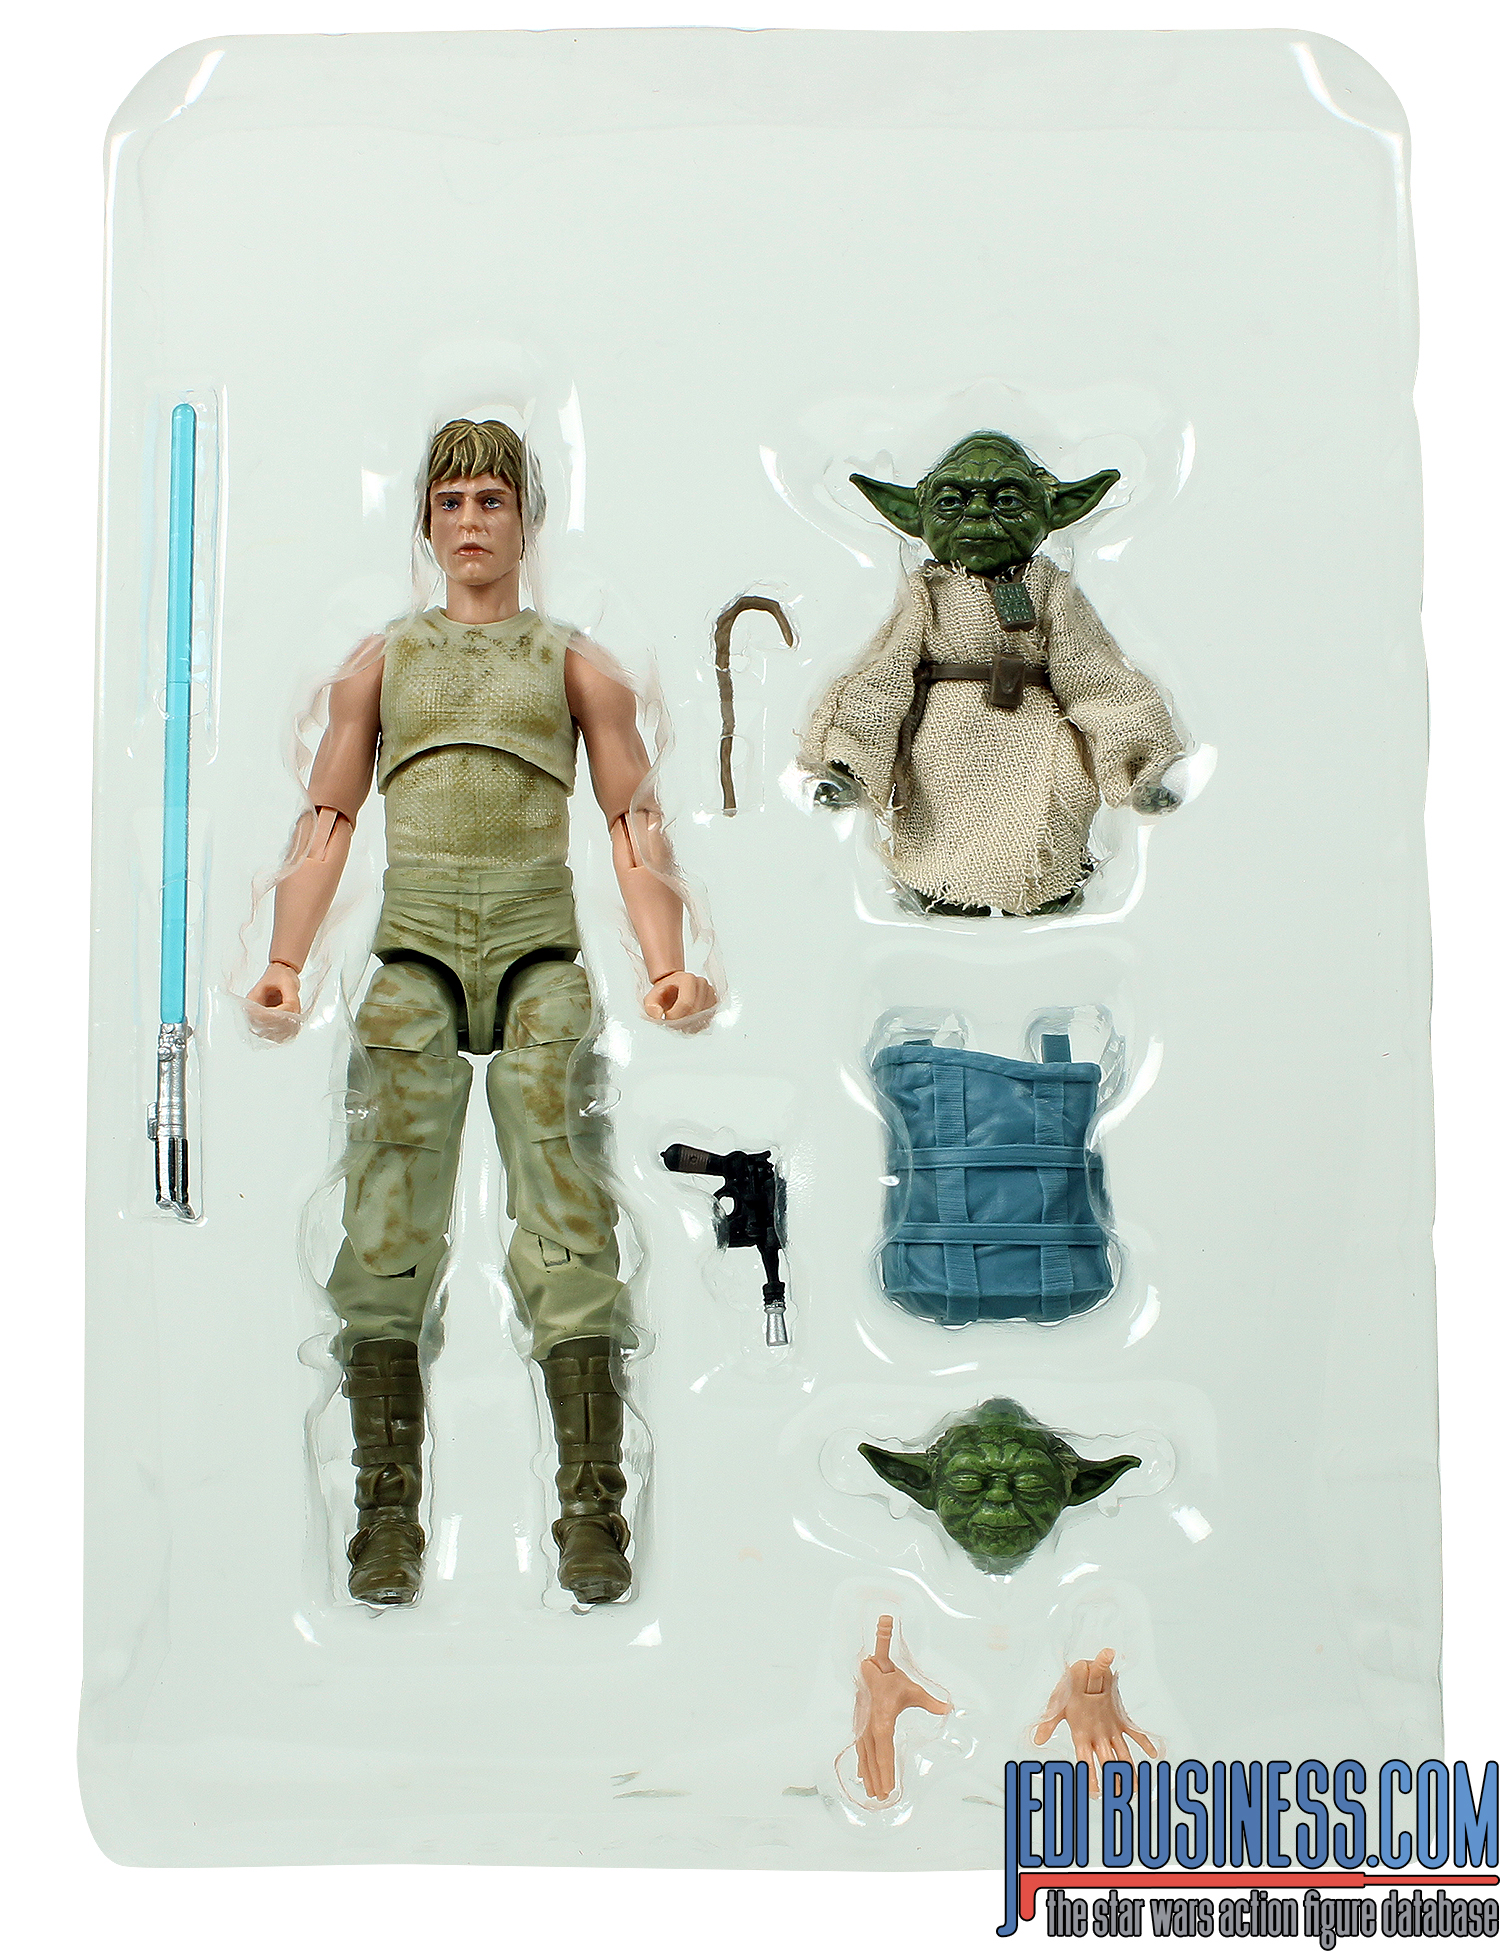 Luke Skywalker Jedi Training 2-Pack With Yoda